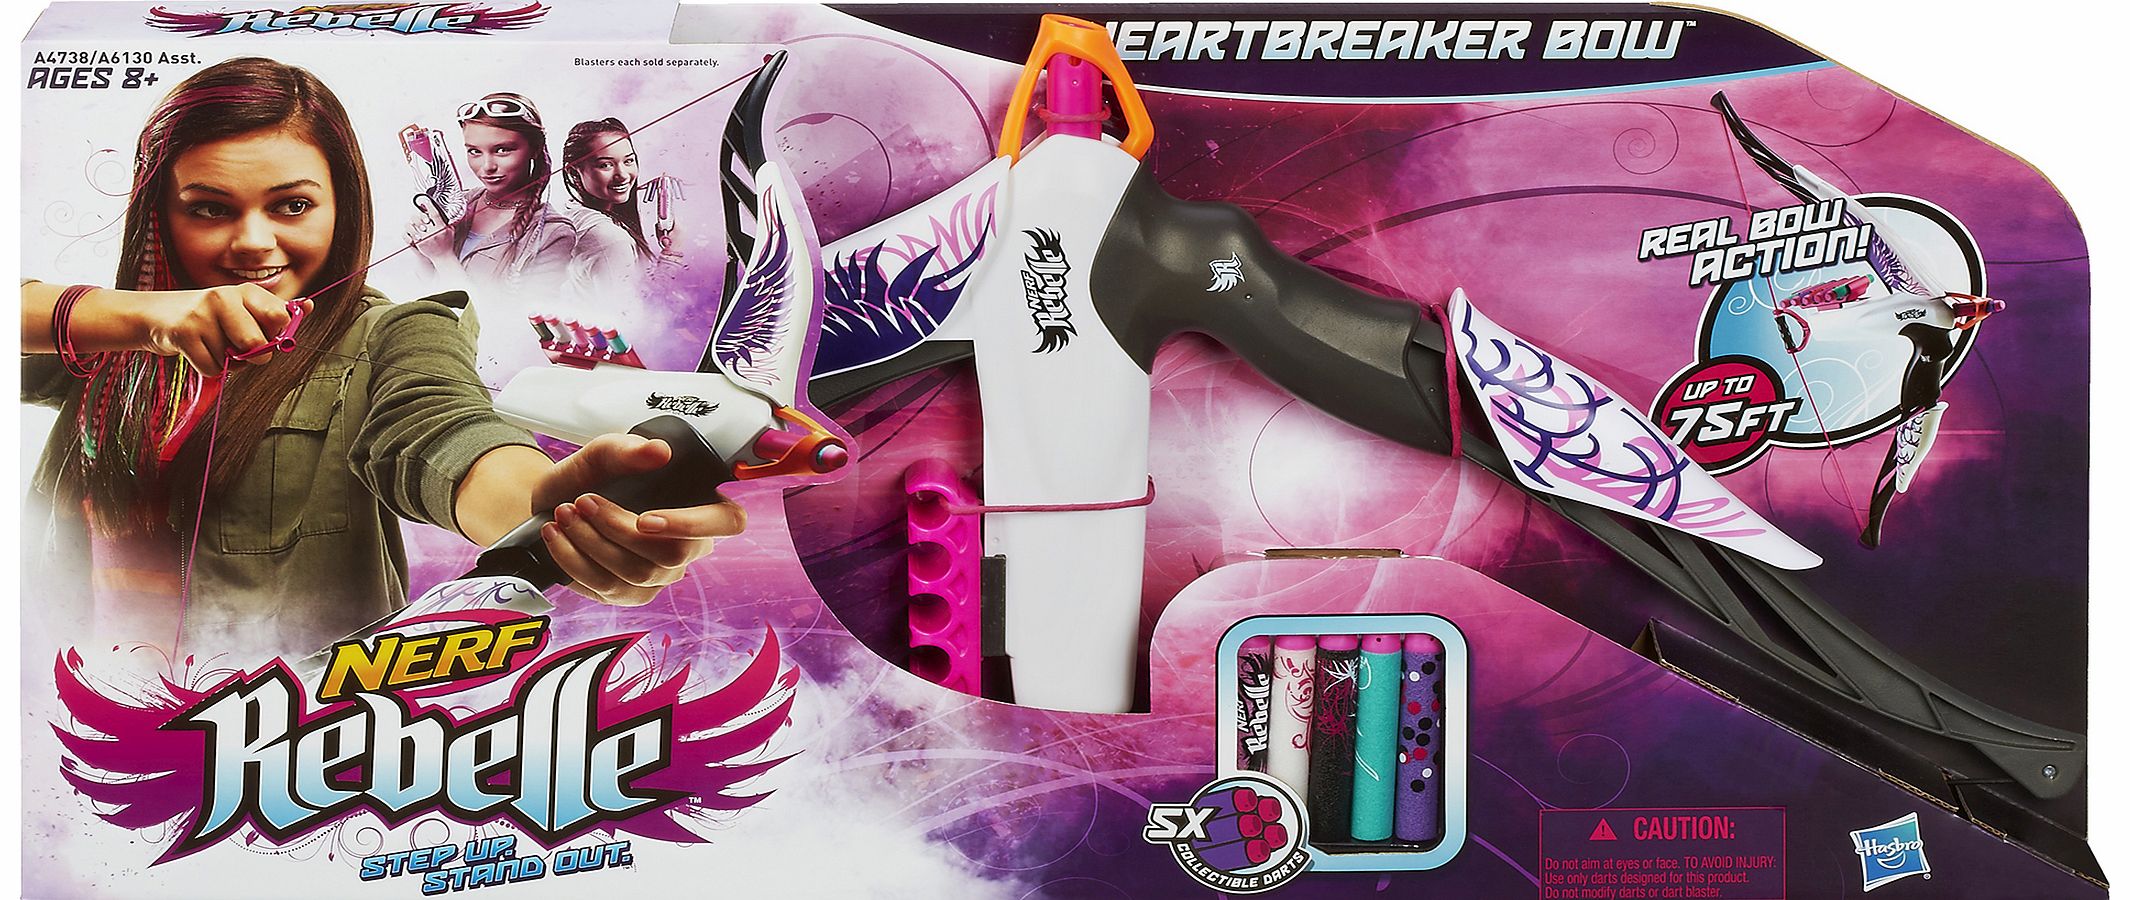 Heartbreaker Bow Blaster